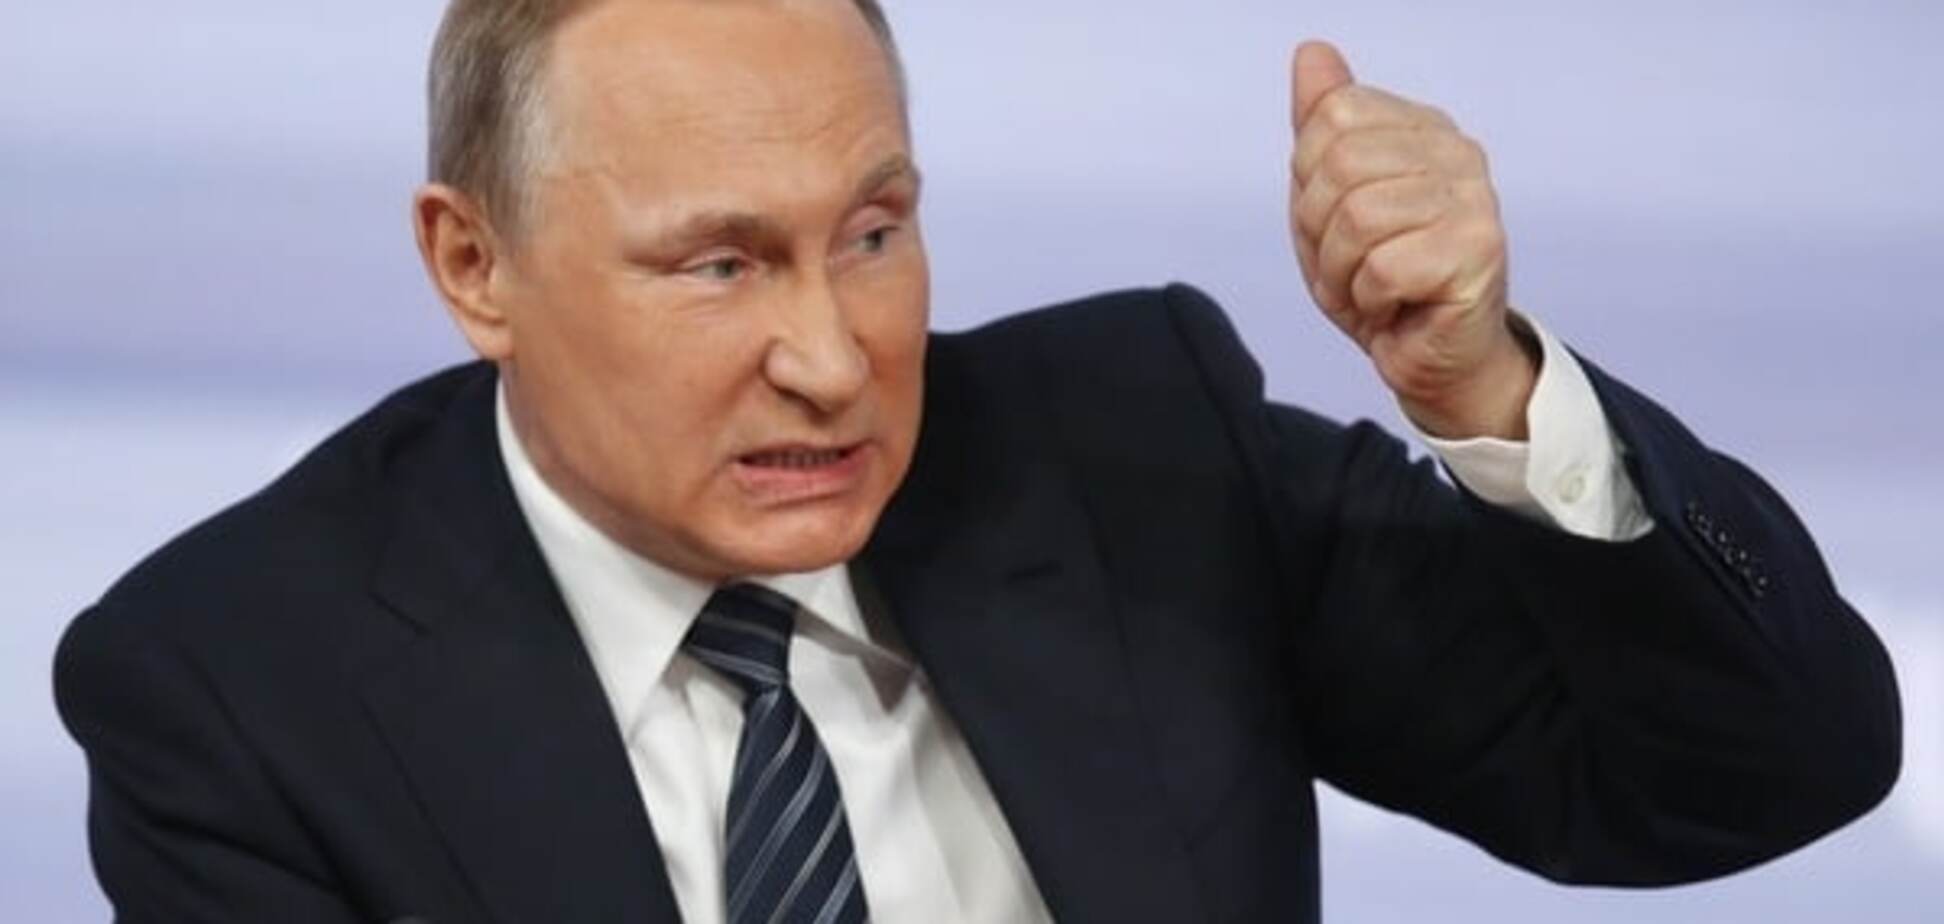 Обида 80 уровня: Россия захотела извинений от США за 'оскорбление' Путина